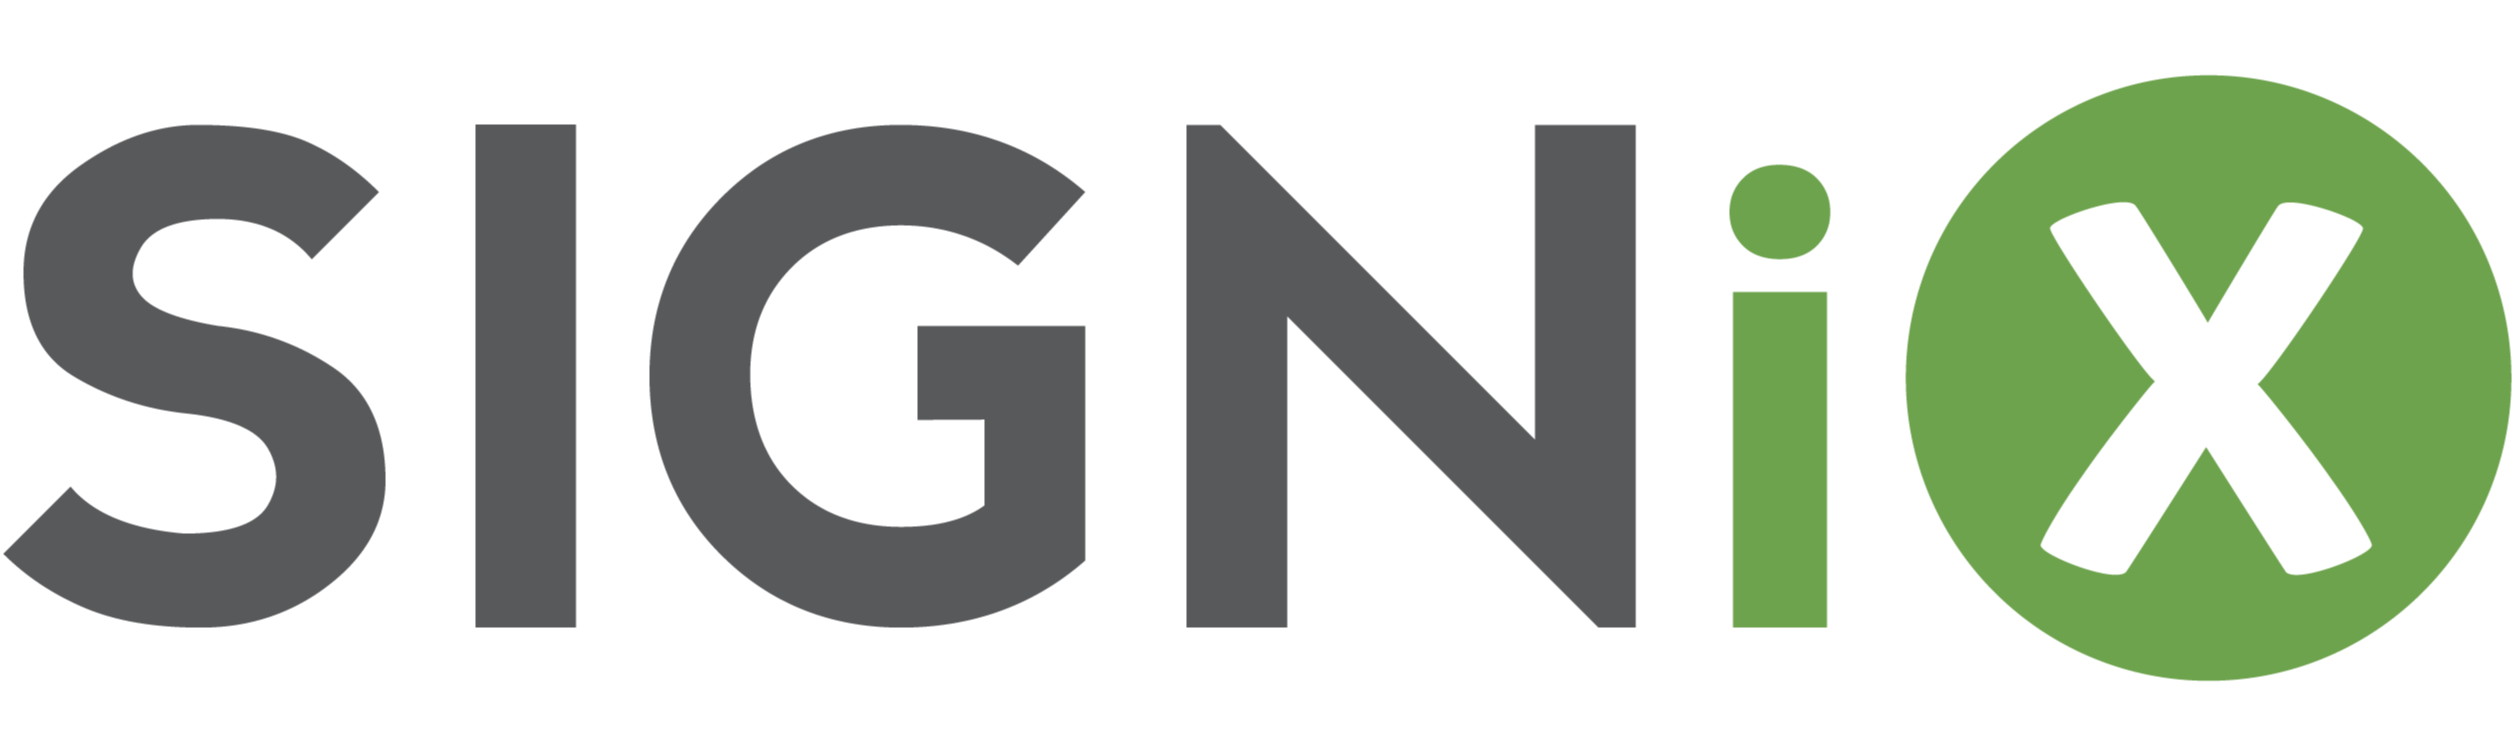 SIGNiX Logo Main